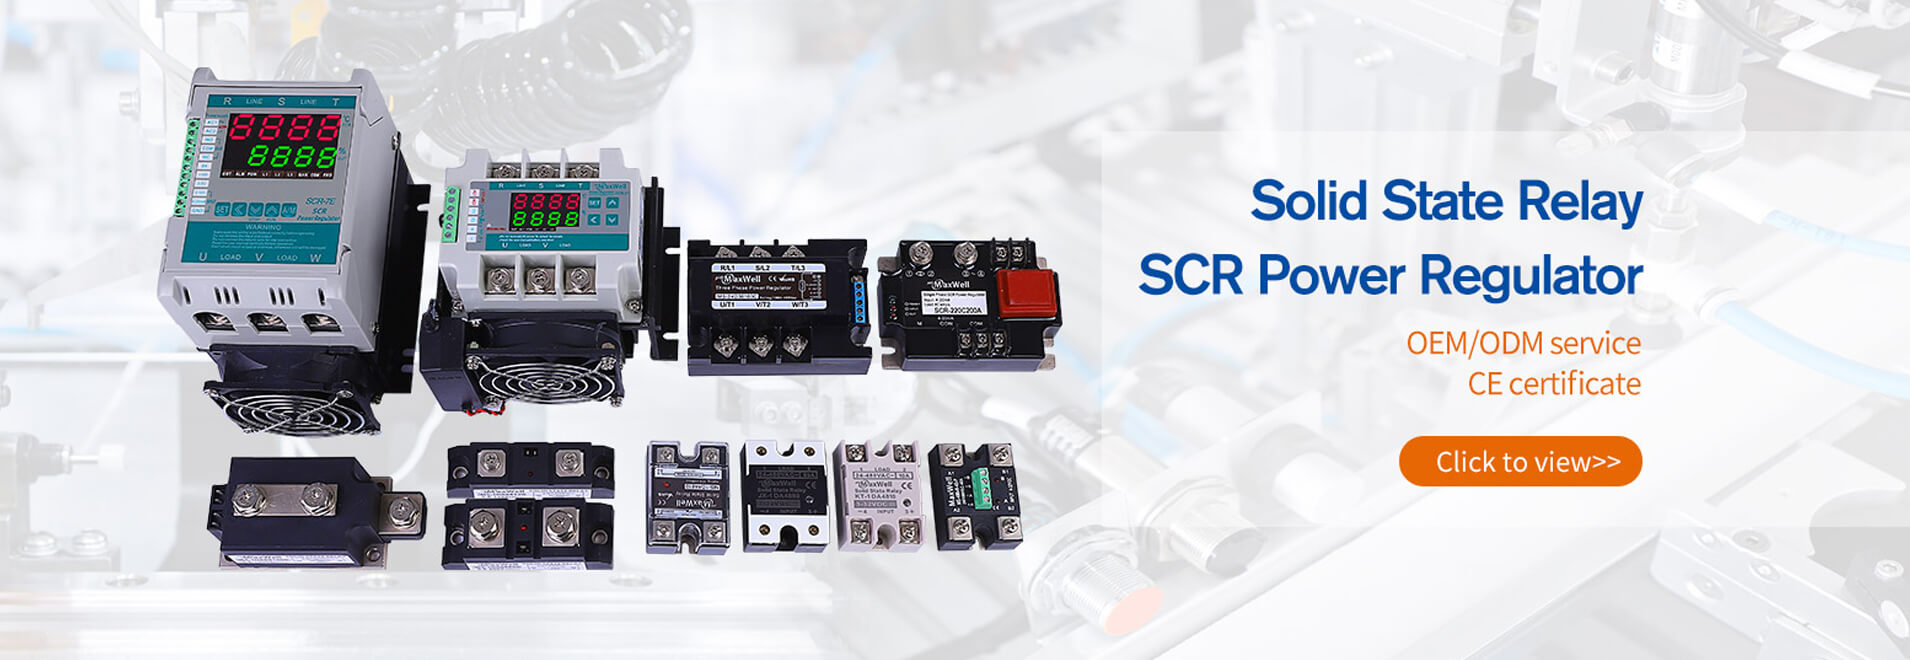 SCR power regulator